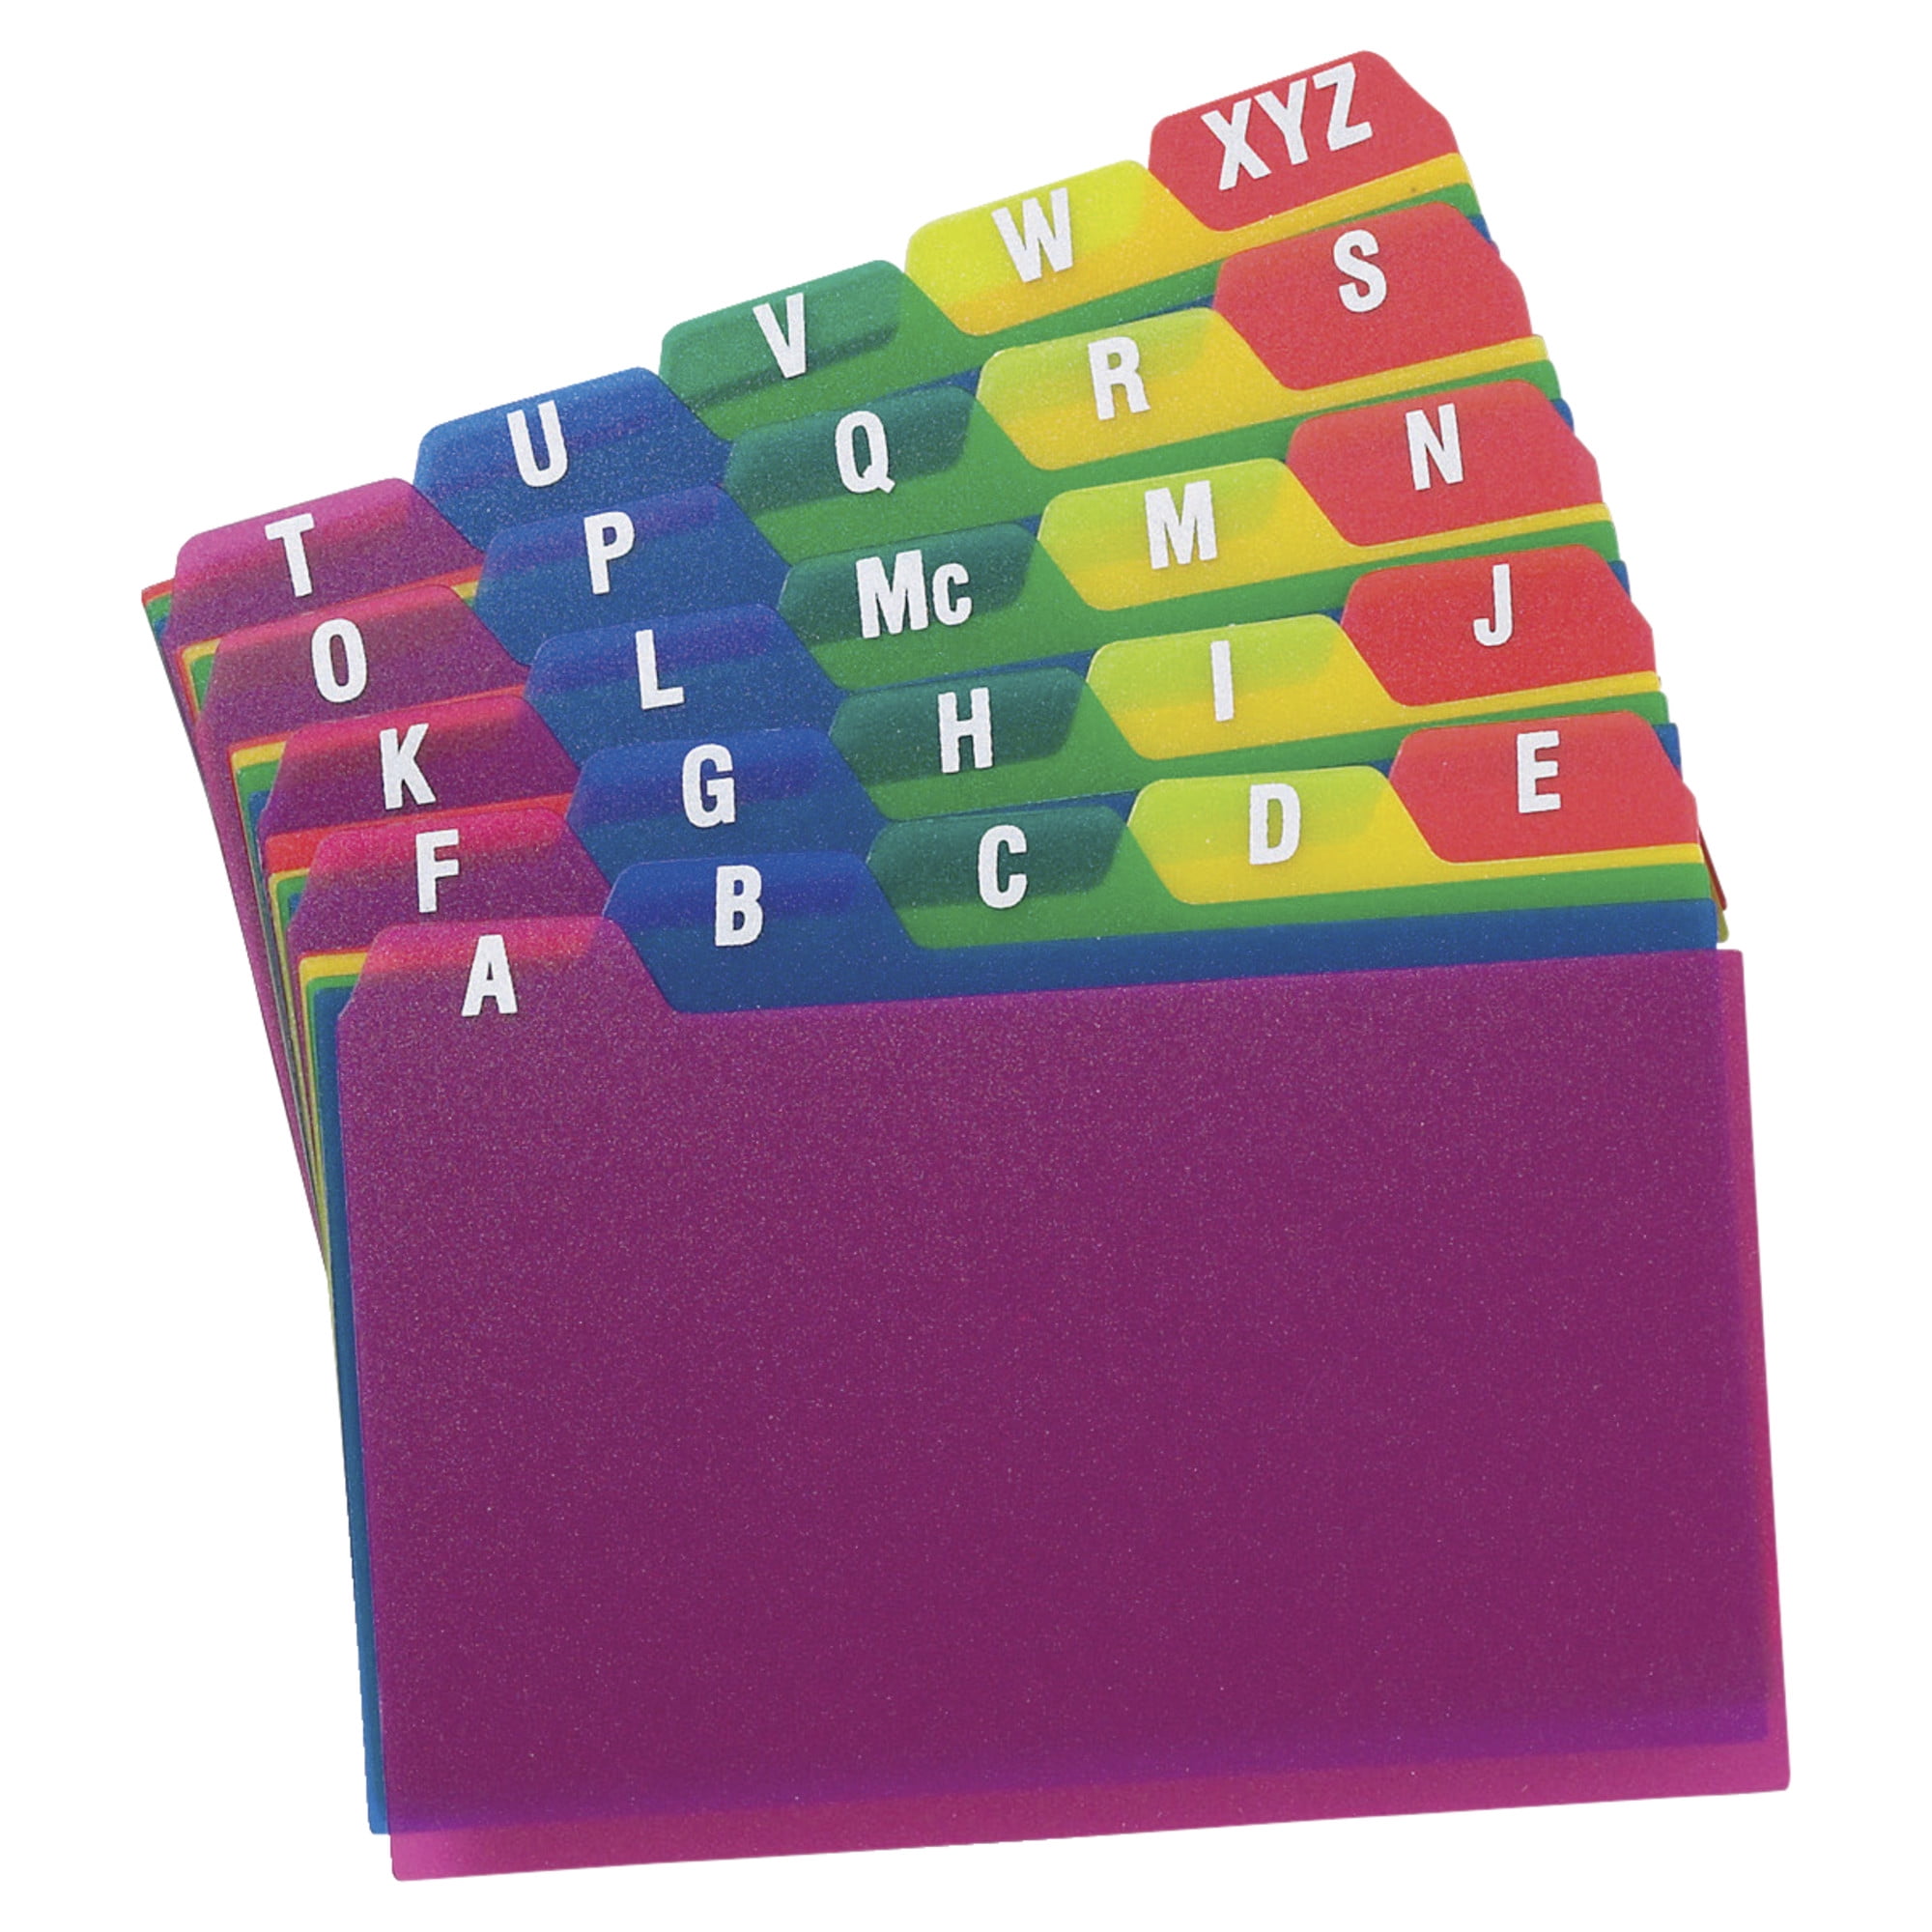 Oxford Card Guides Alpha 1/5 Tab Polypropylene 4 x 6 25/Set